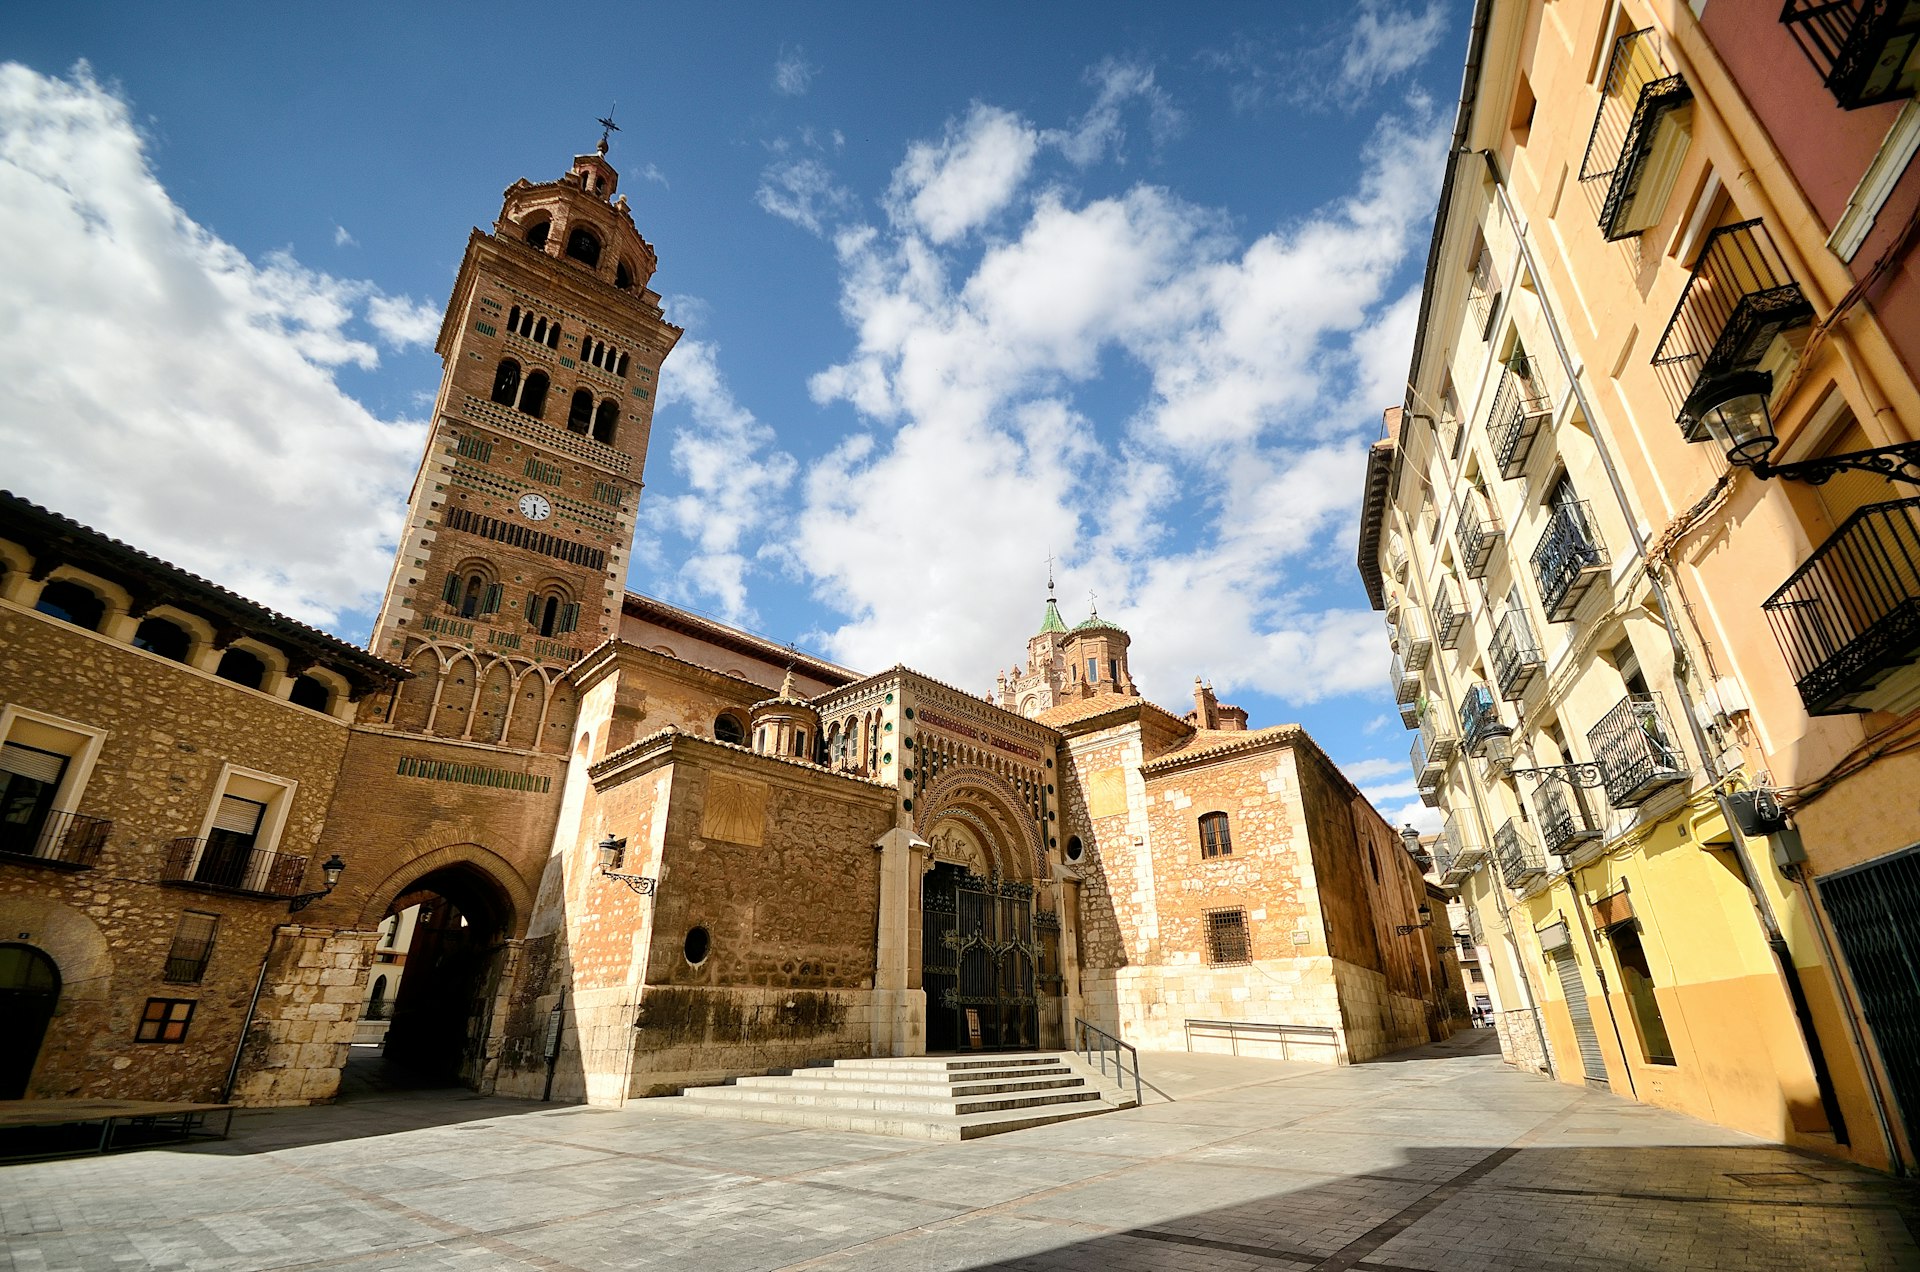 The exterior of Catedral de Santa Maria in Teruel, Spain